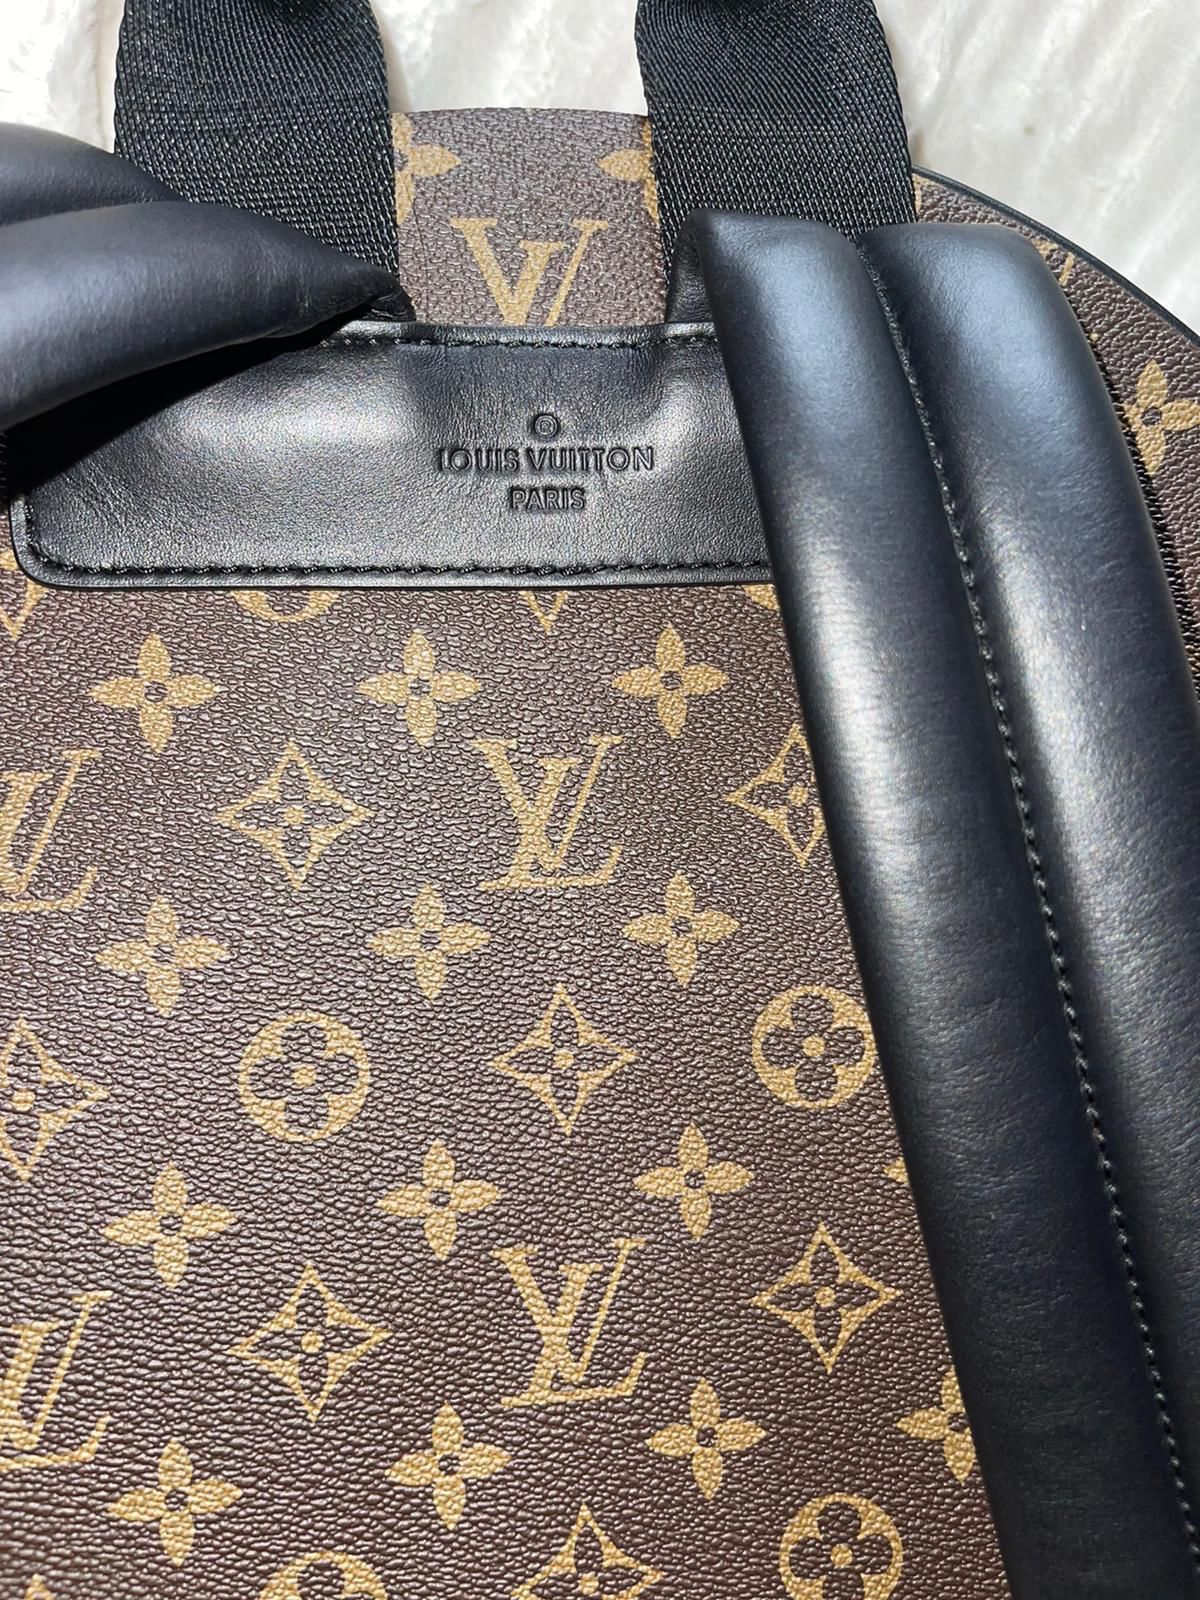 Used Louis Vuitton Odeon Pm Handbag for Sale in Kearny, NJ